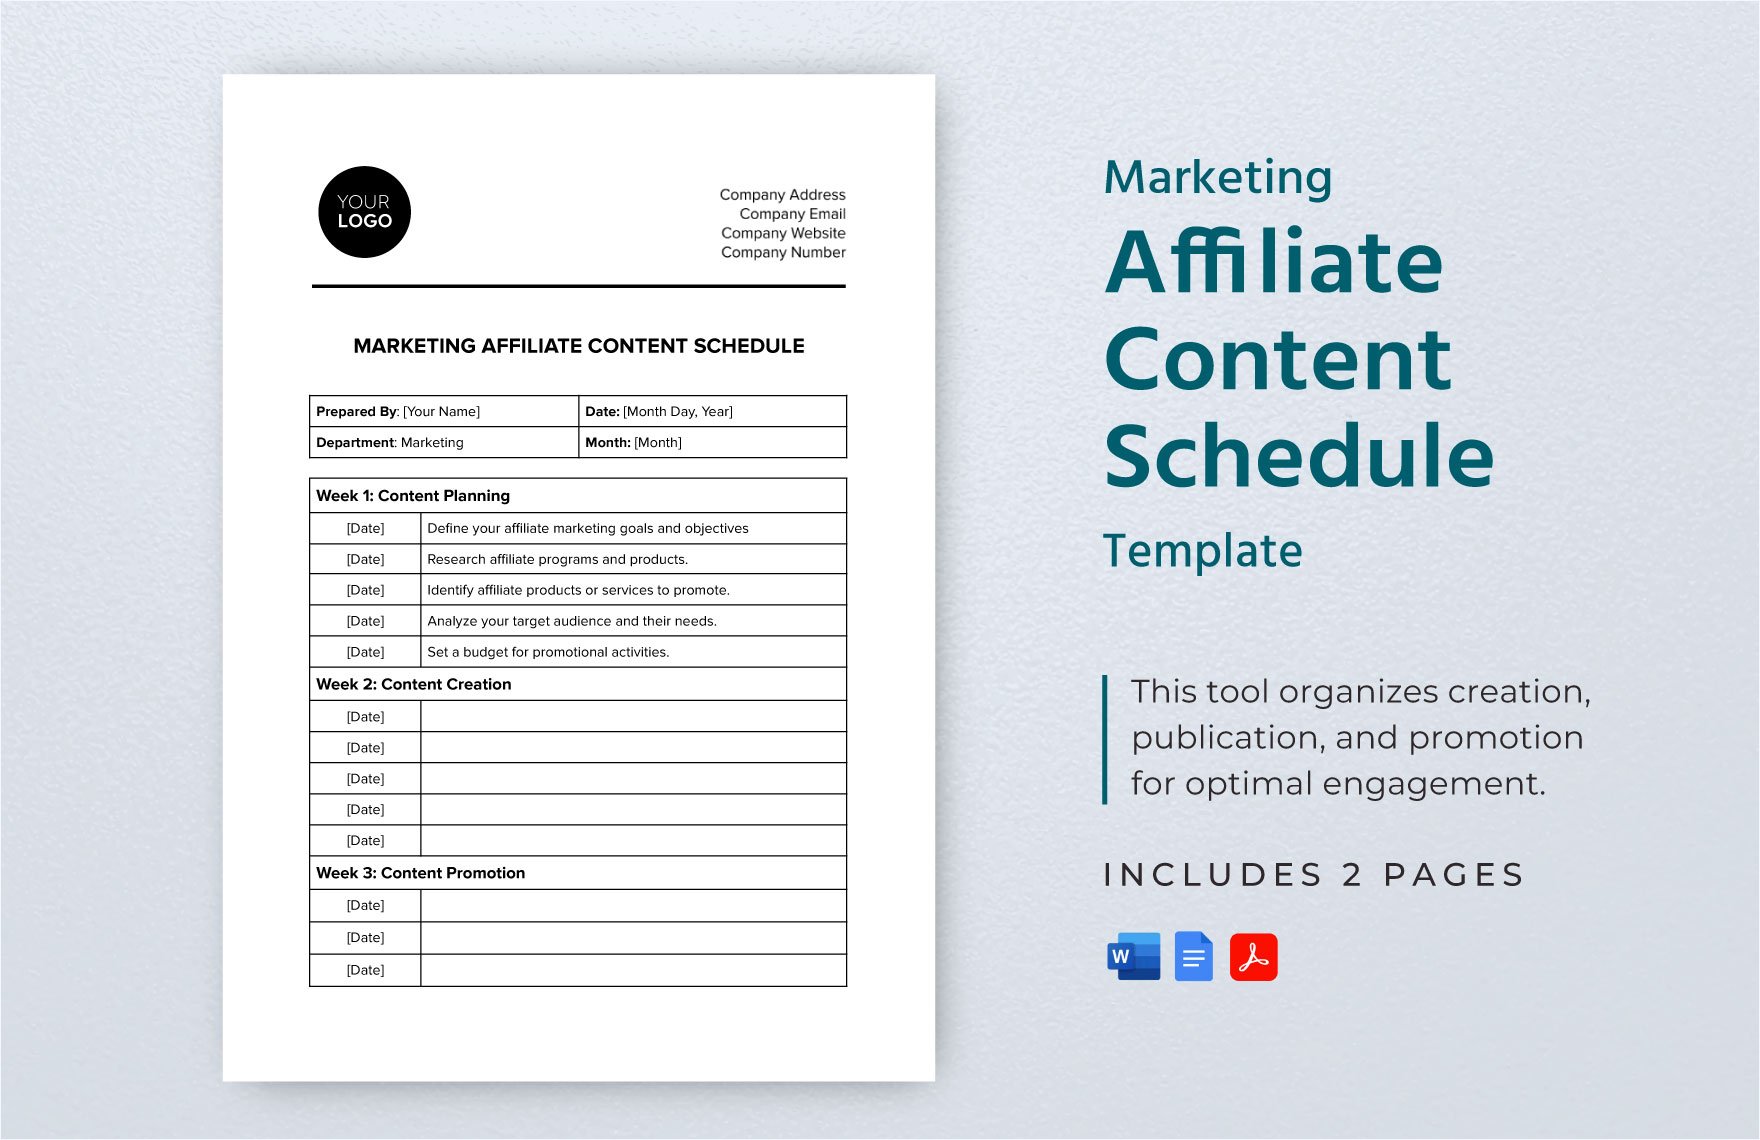 Marketing Affiliate Content Schedule Template in Word, Google Docs, PDF